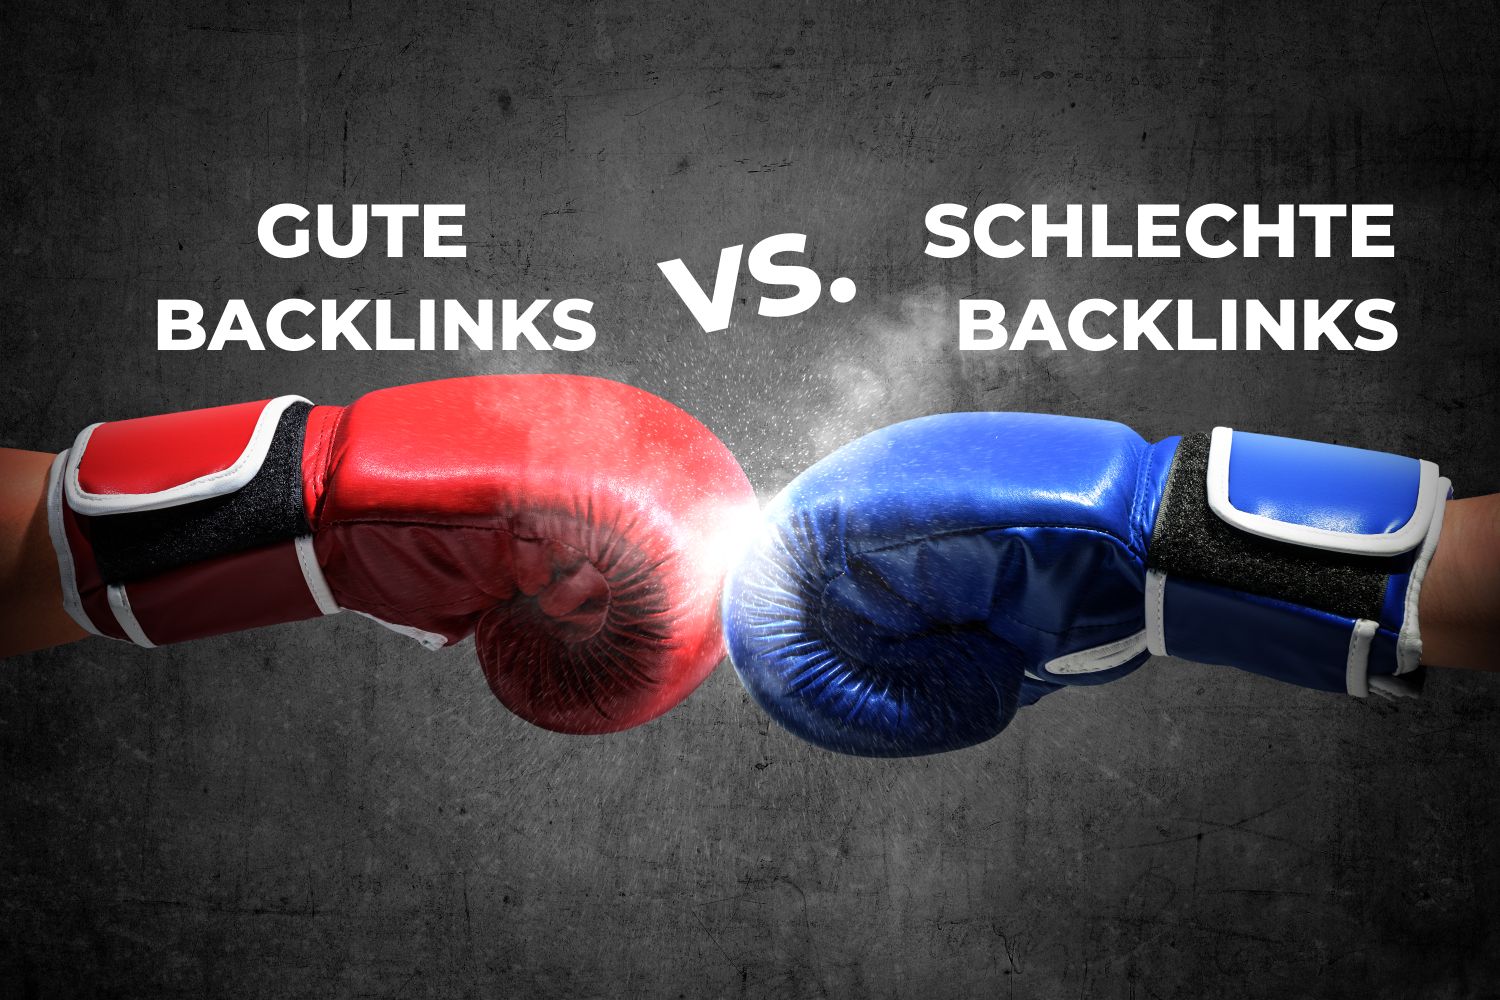 hochwertige Backlinks vs. schlechte Backlinks